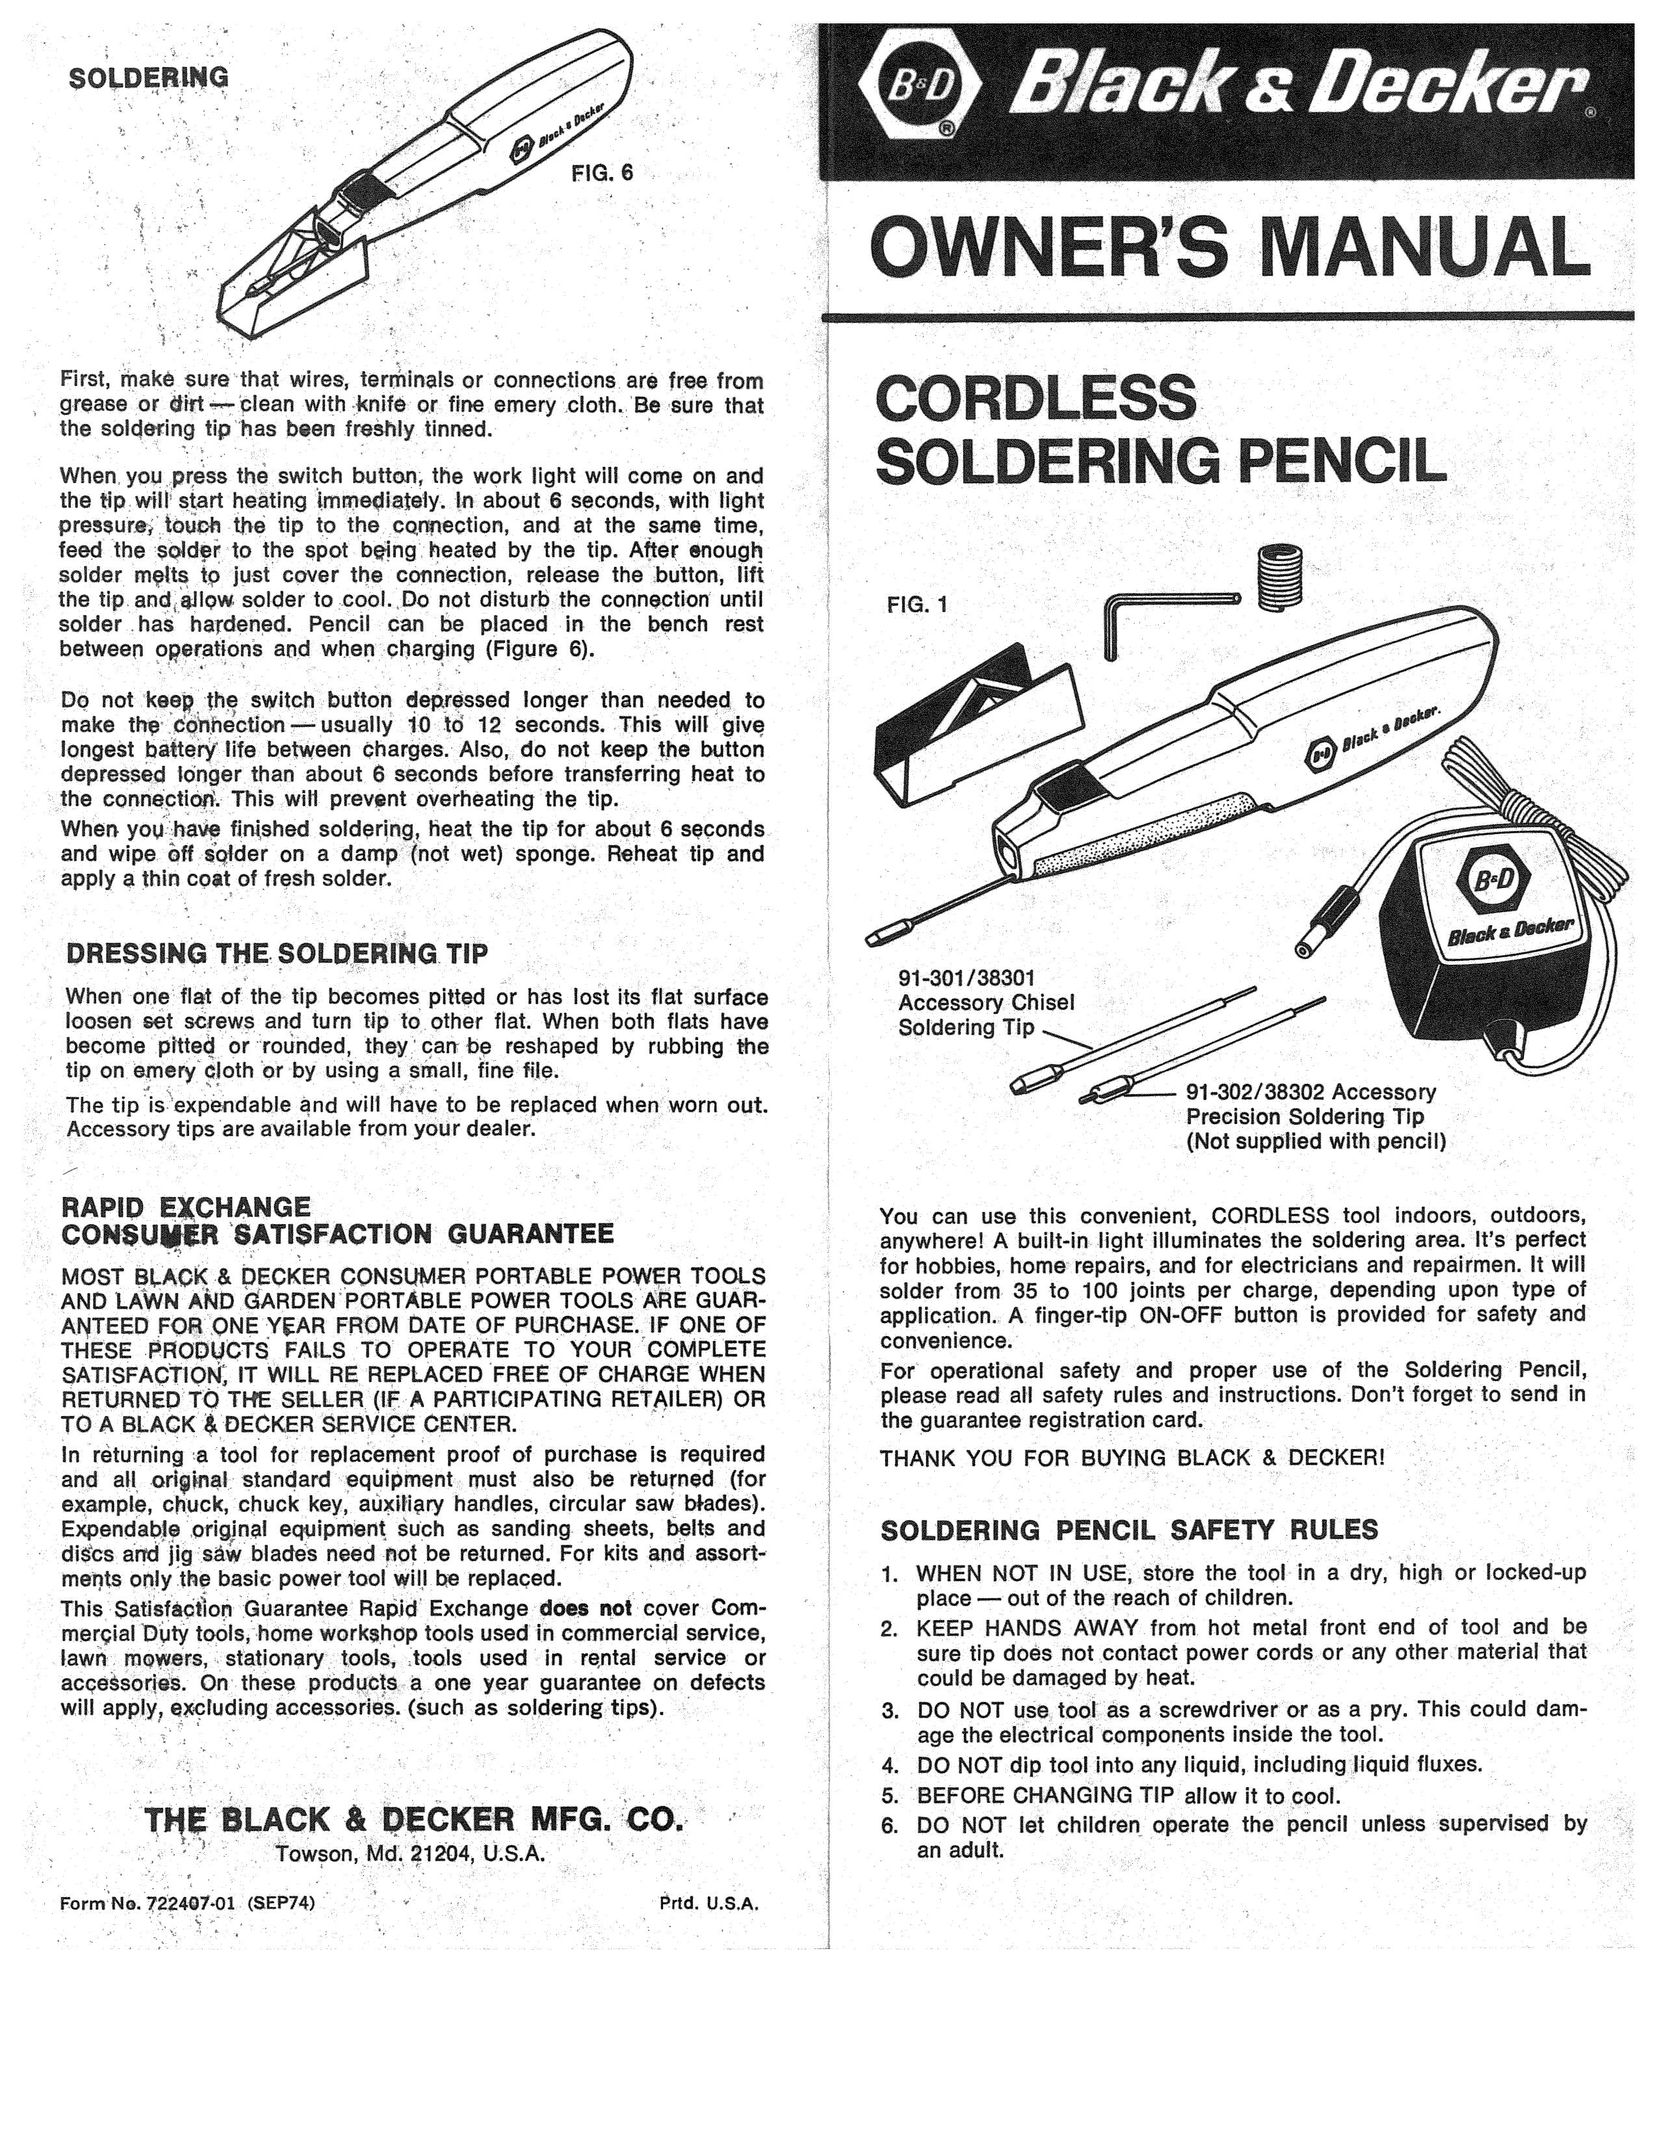 Black & Decker 91-302/38302 Soldering Gun User Manual